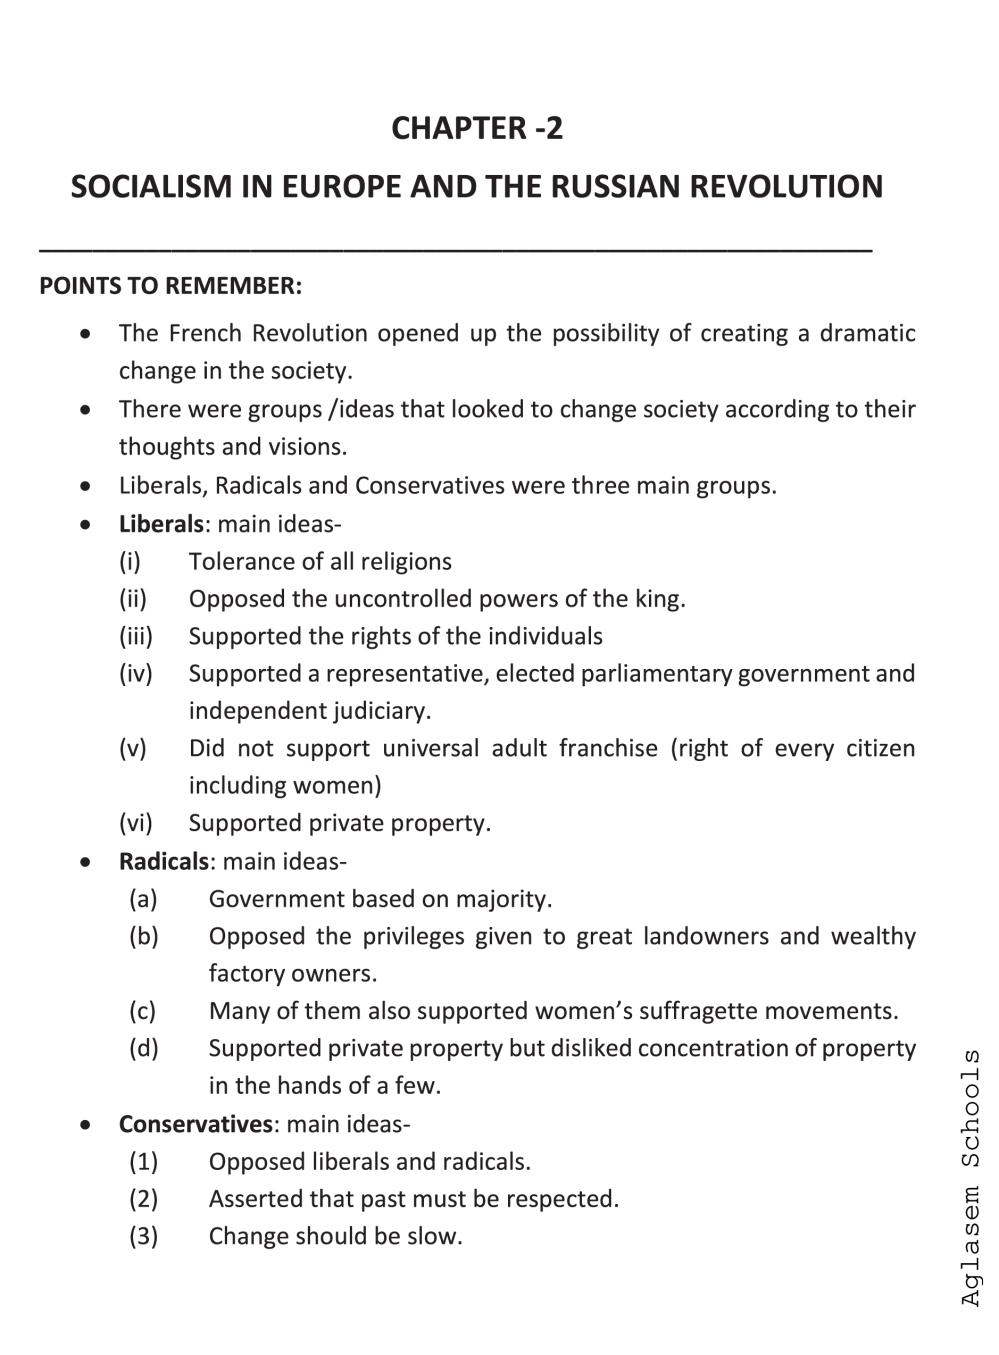 russian revolution research paper topics